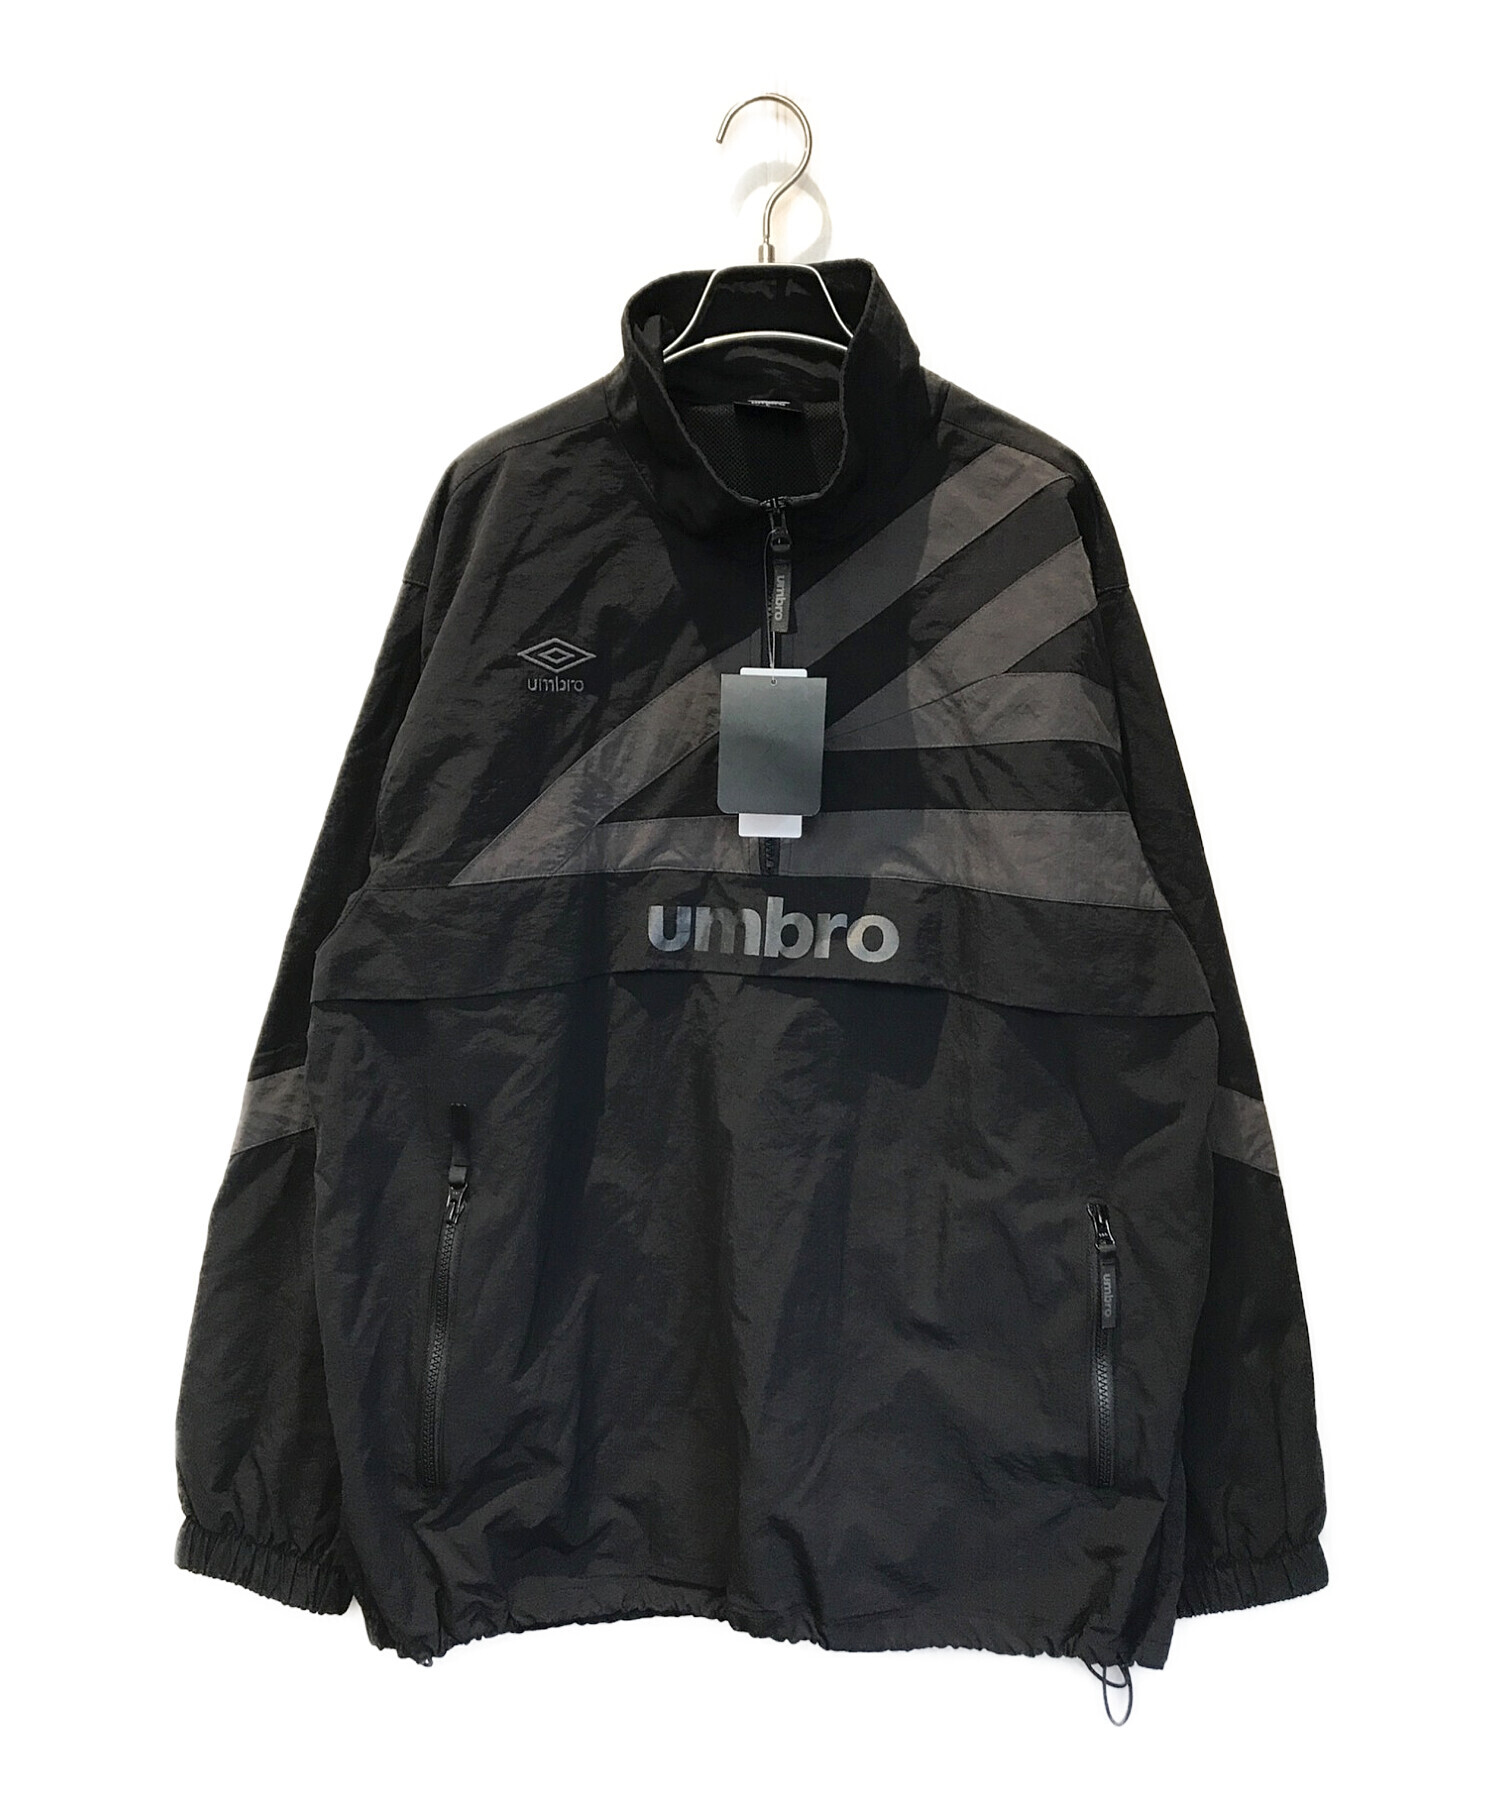 UMBRO (アンブロ) ナイロンジャケット ブラック サイズ:L